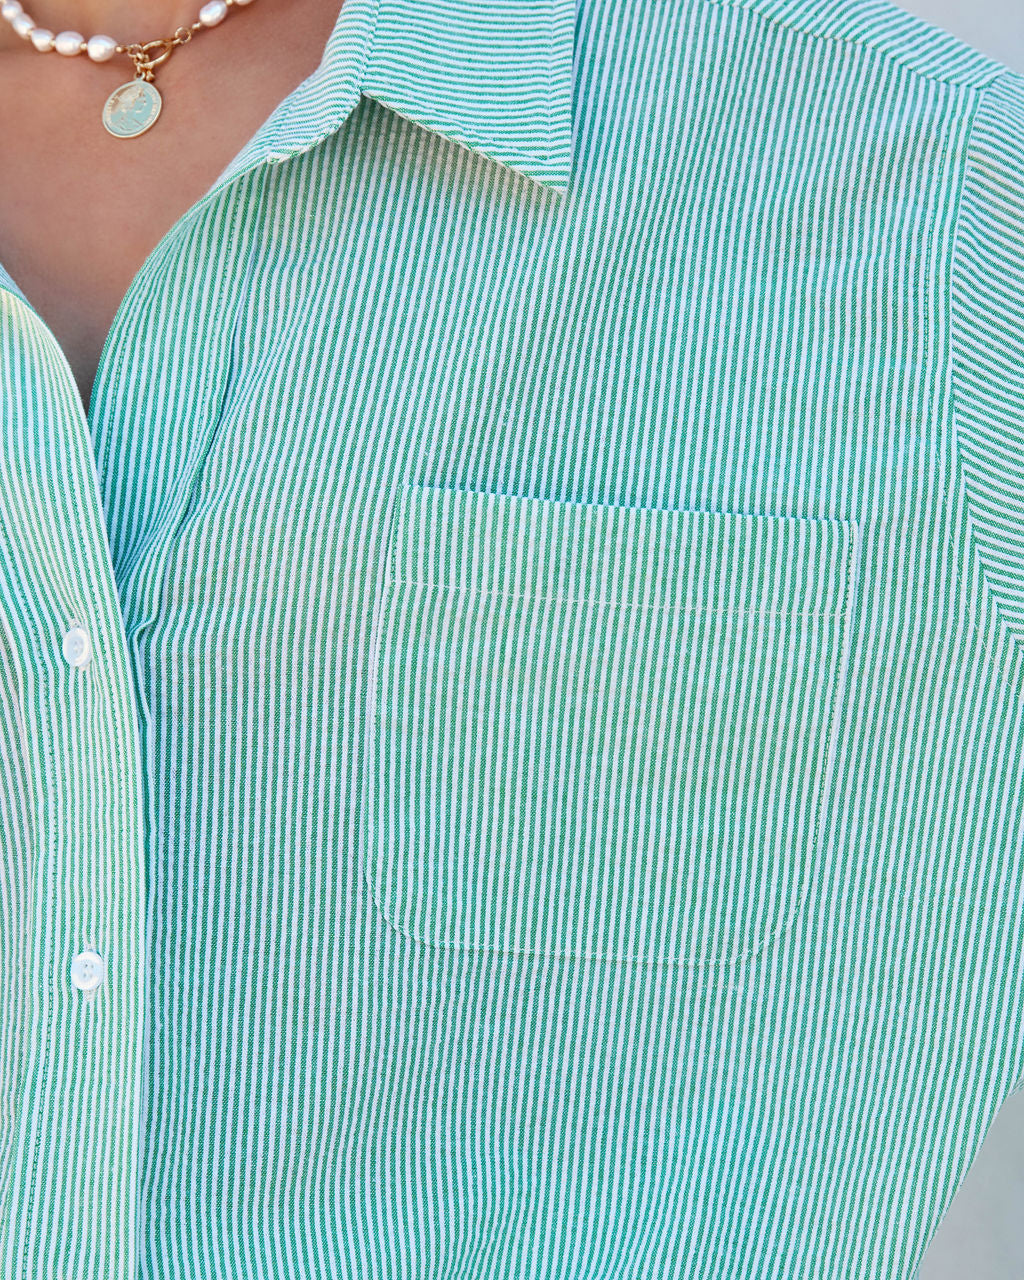 Sebastian Cotton Blend Striped Button Down Top - Green Ins Street